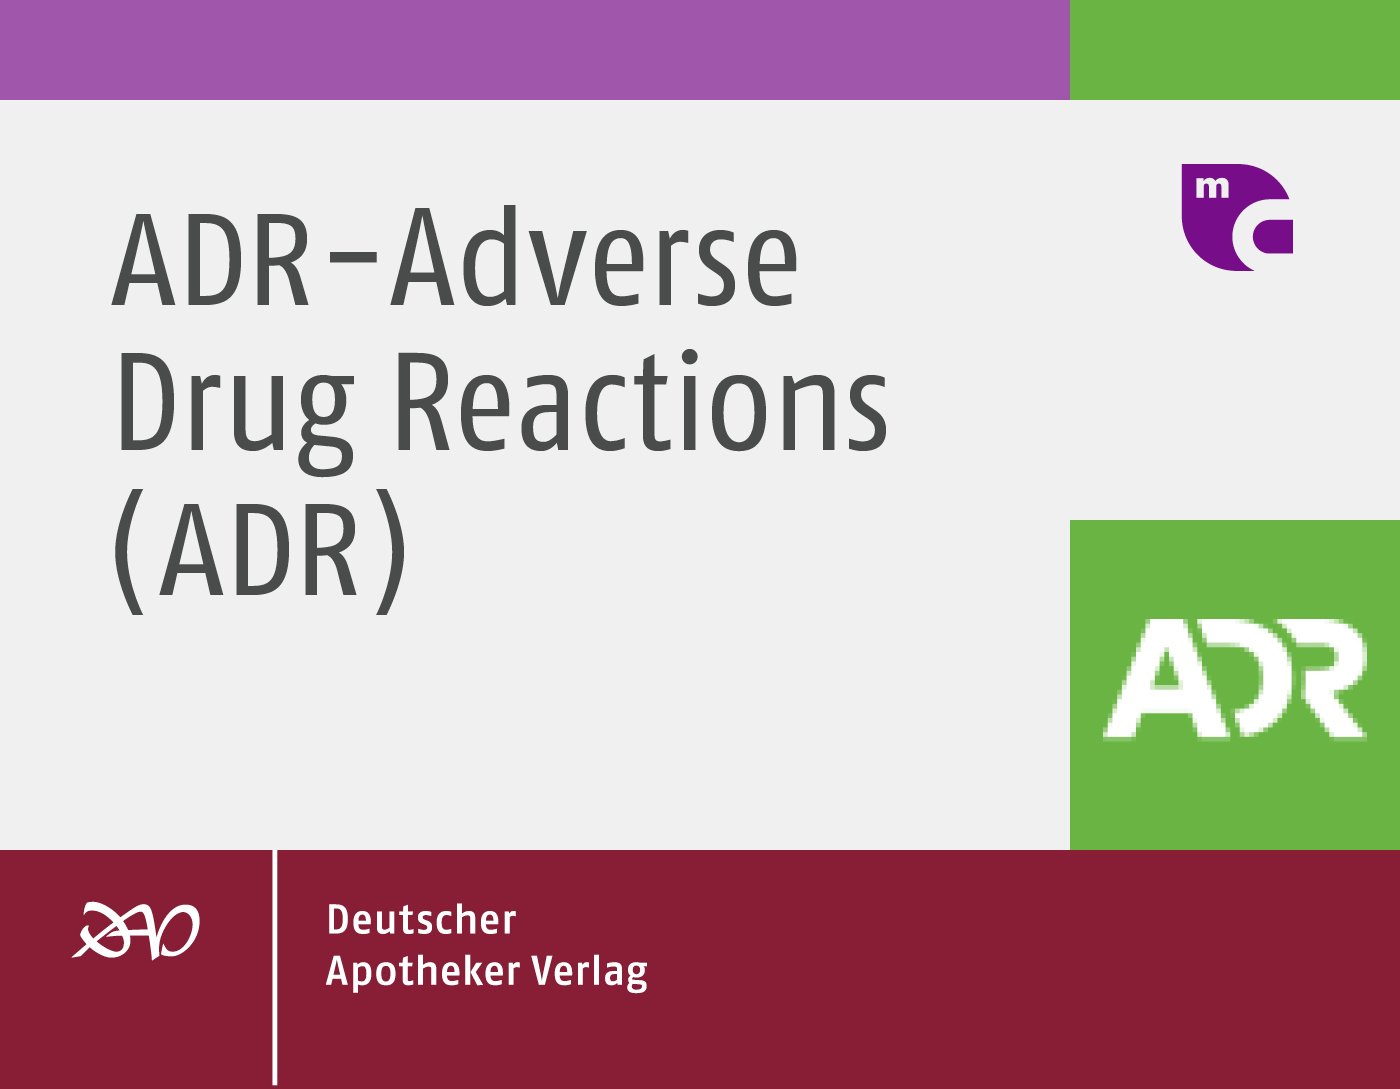 ADR - Adverse Drug Reactions